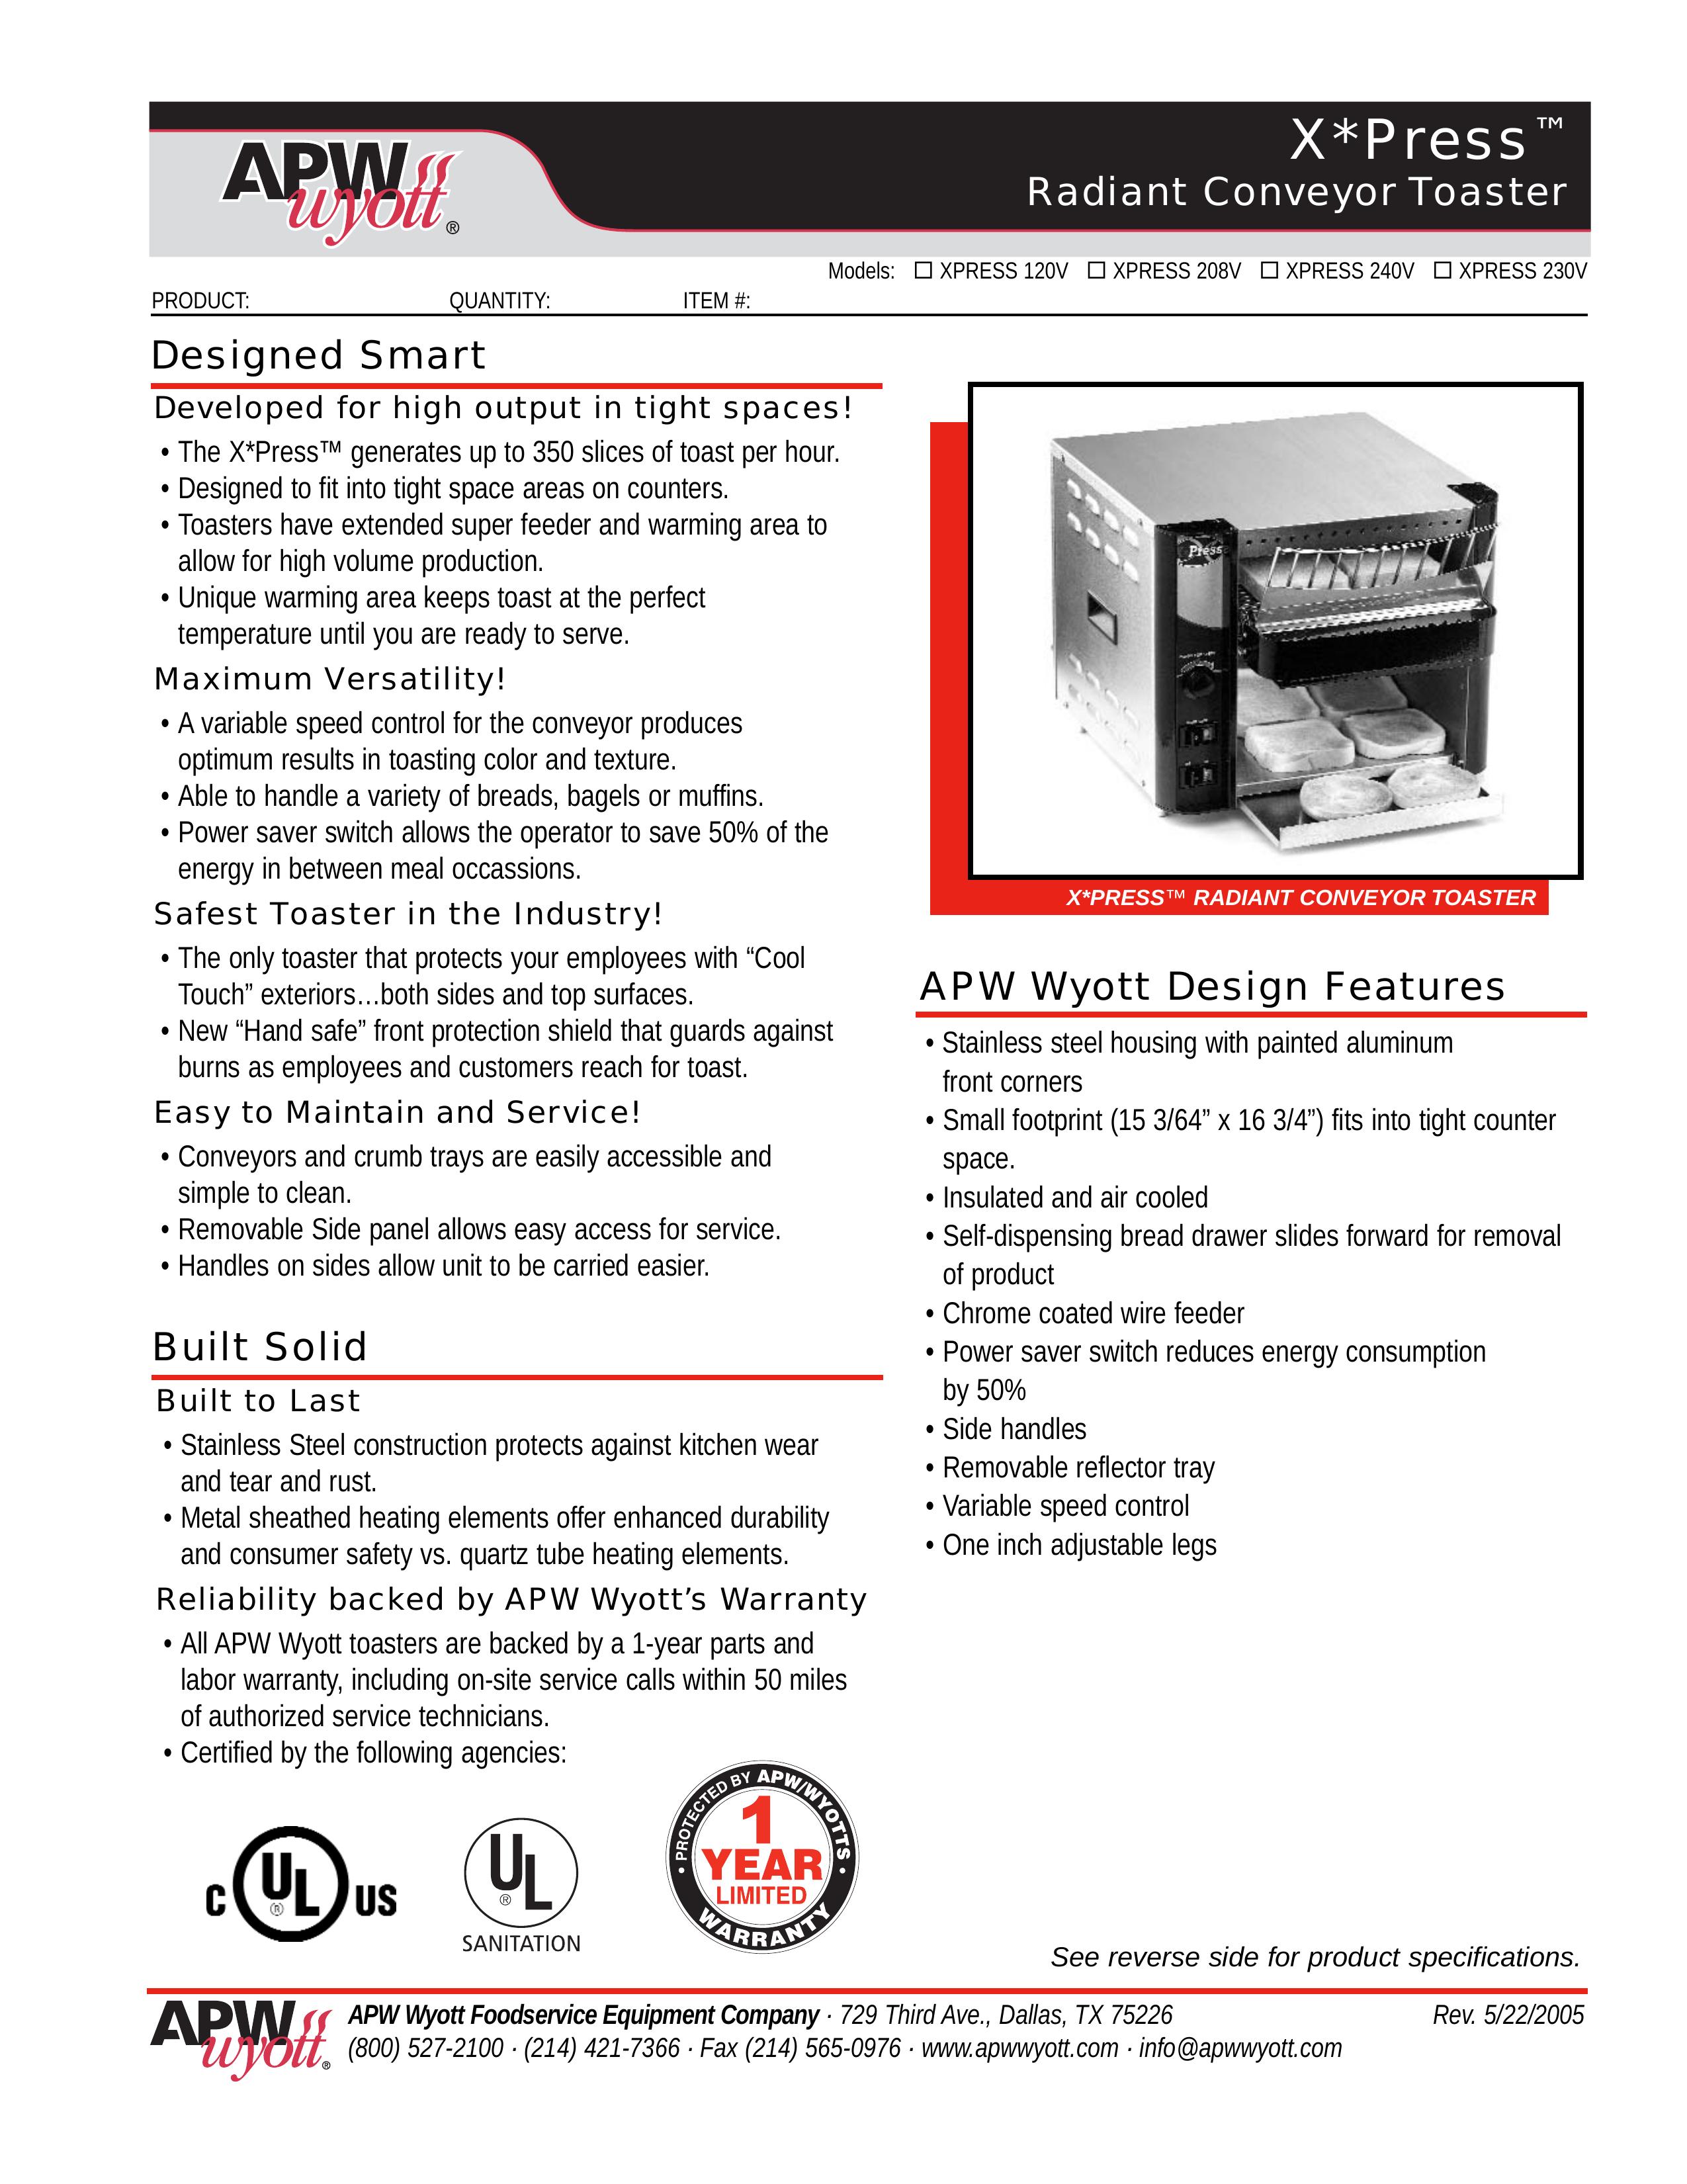 APW Wyott XPRESS 230V Toaster User Manual